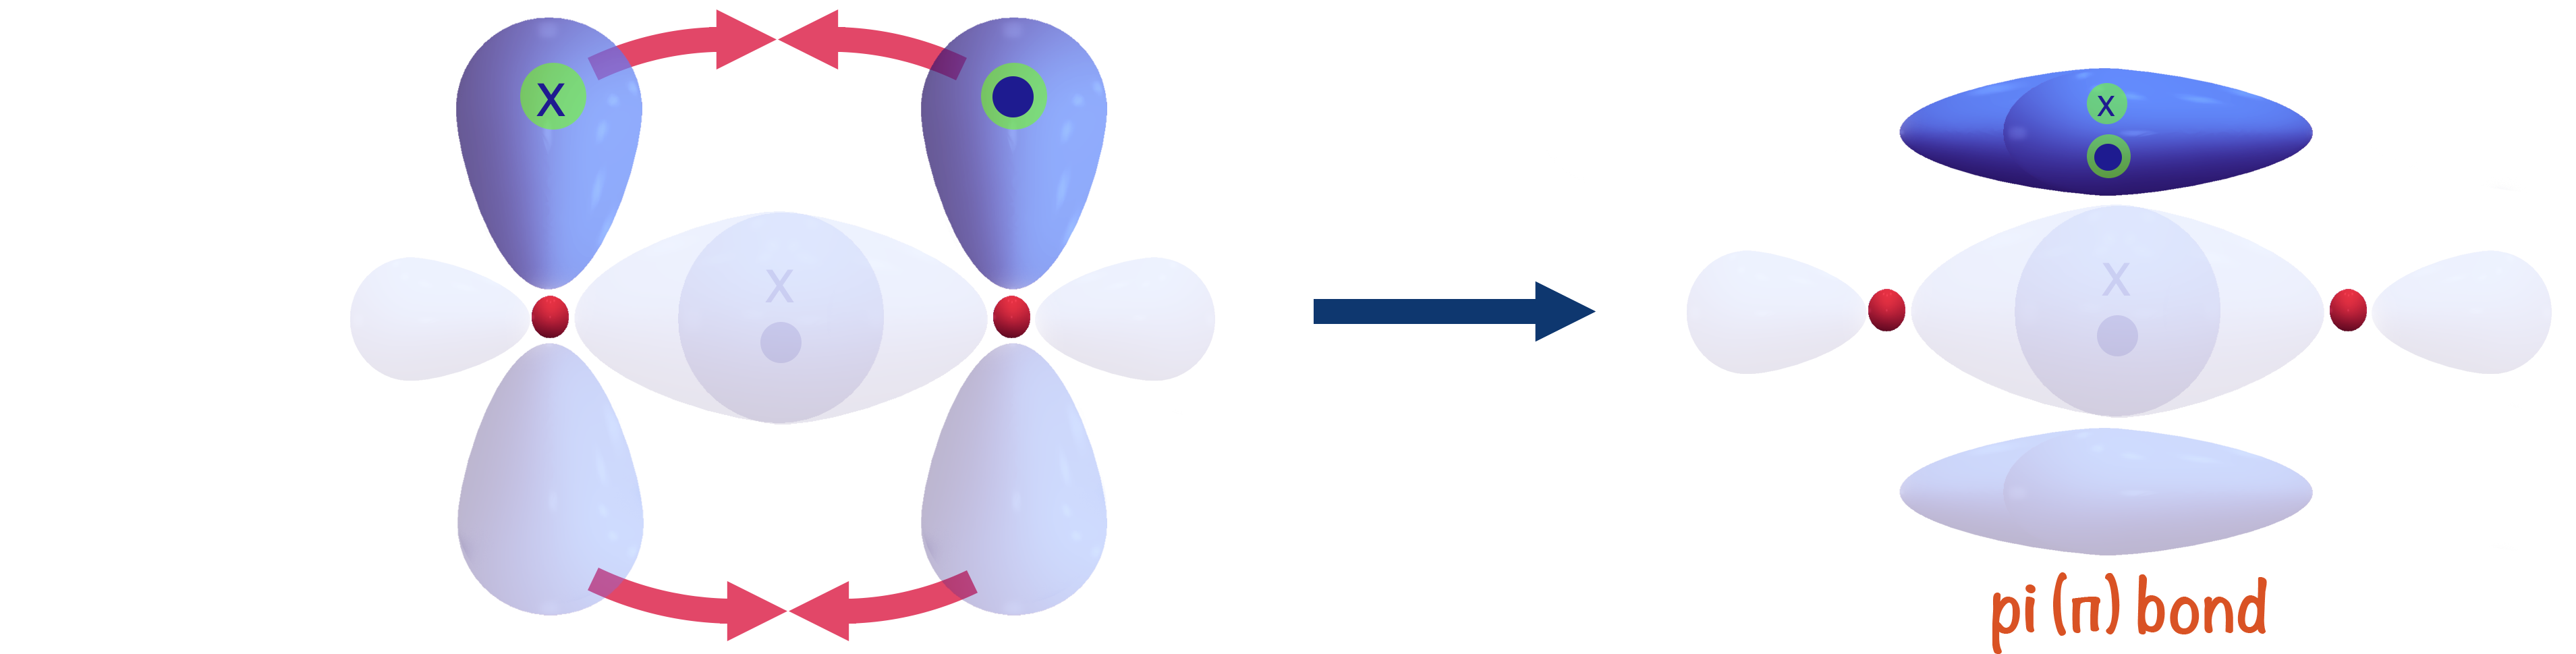 pi bond sideways orbital overlap electron orbitals 